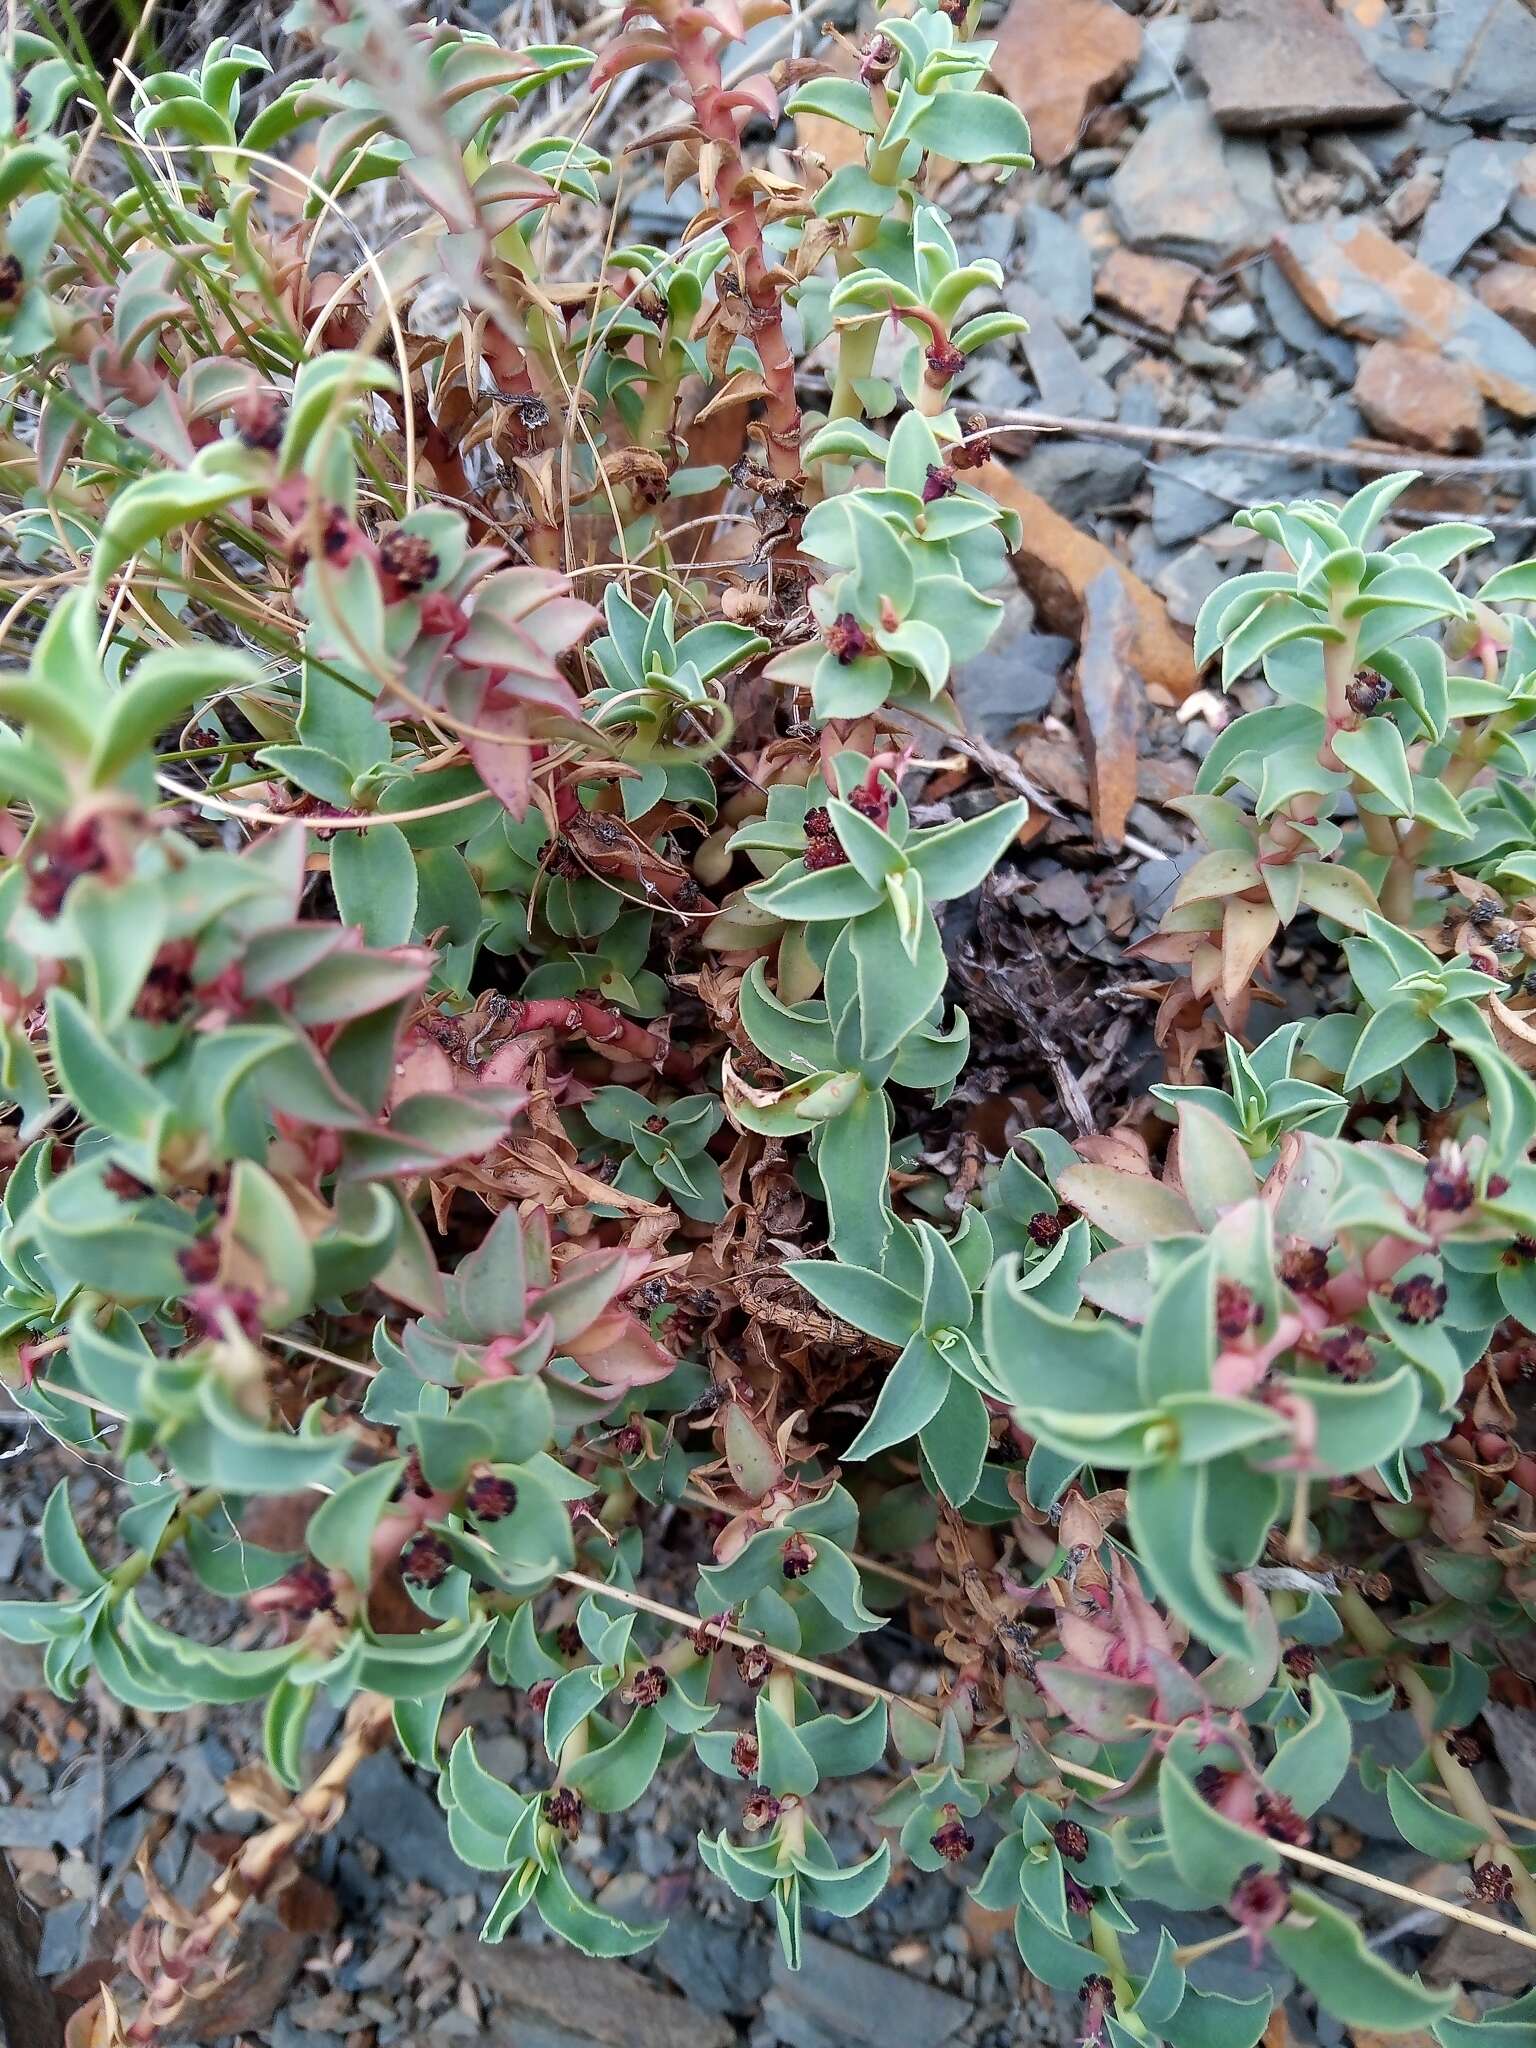 Image of Euphorbia portulacoides L.